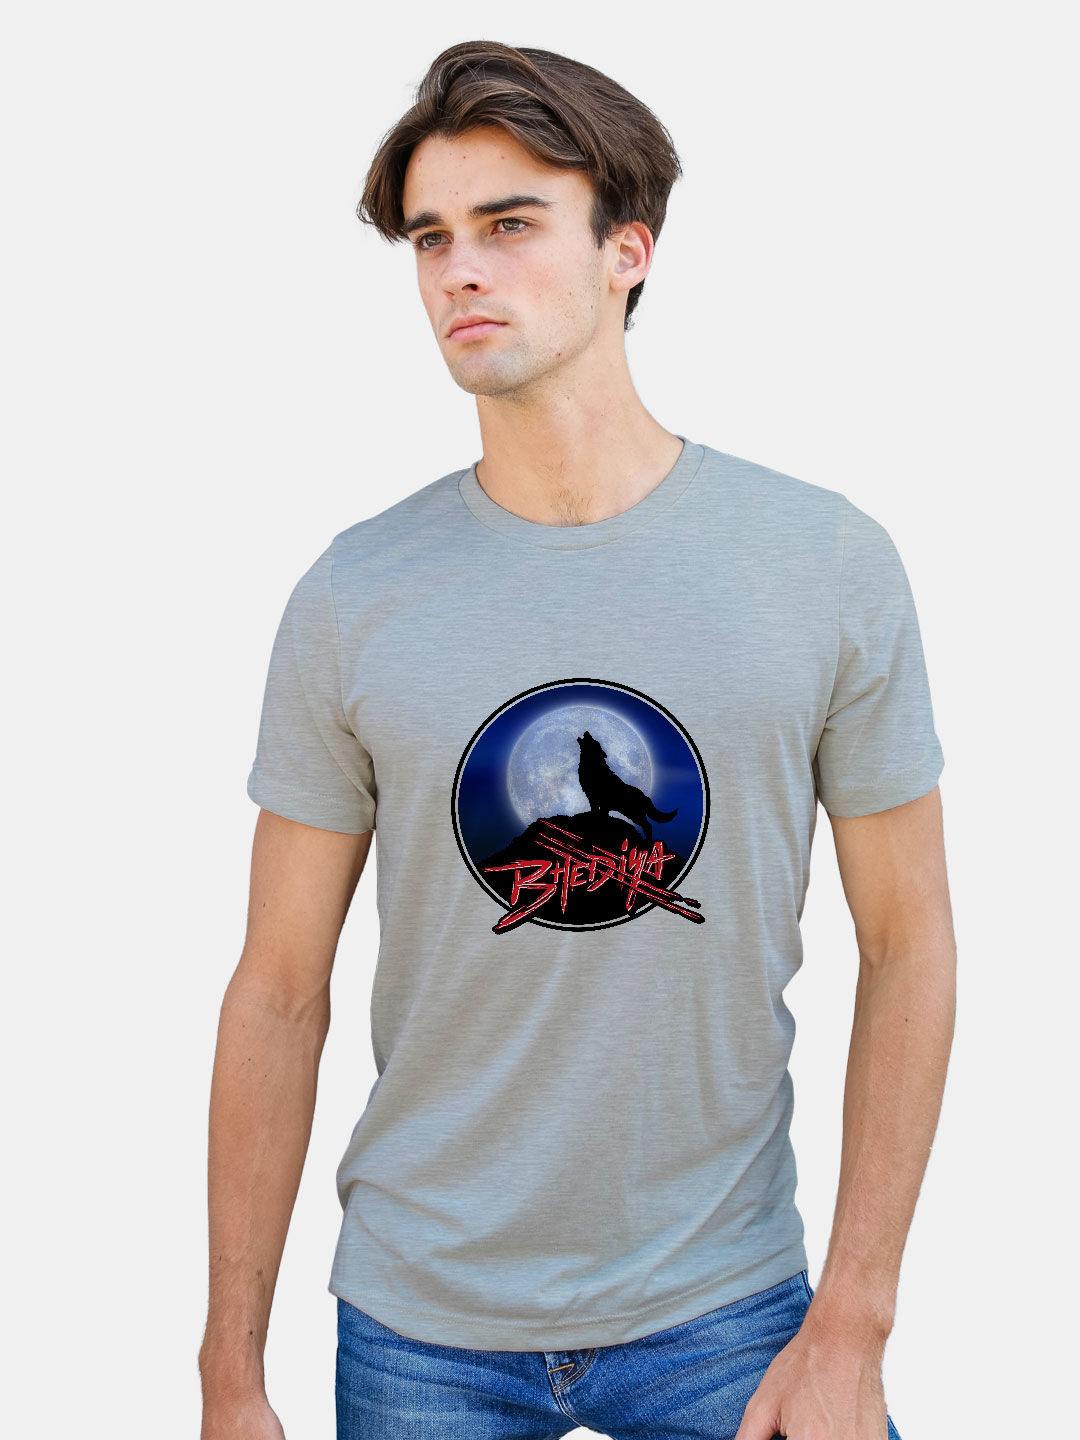 Buy Bhediya Growl Grey - Male Designer T-Shirts T-Shirts Online